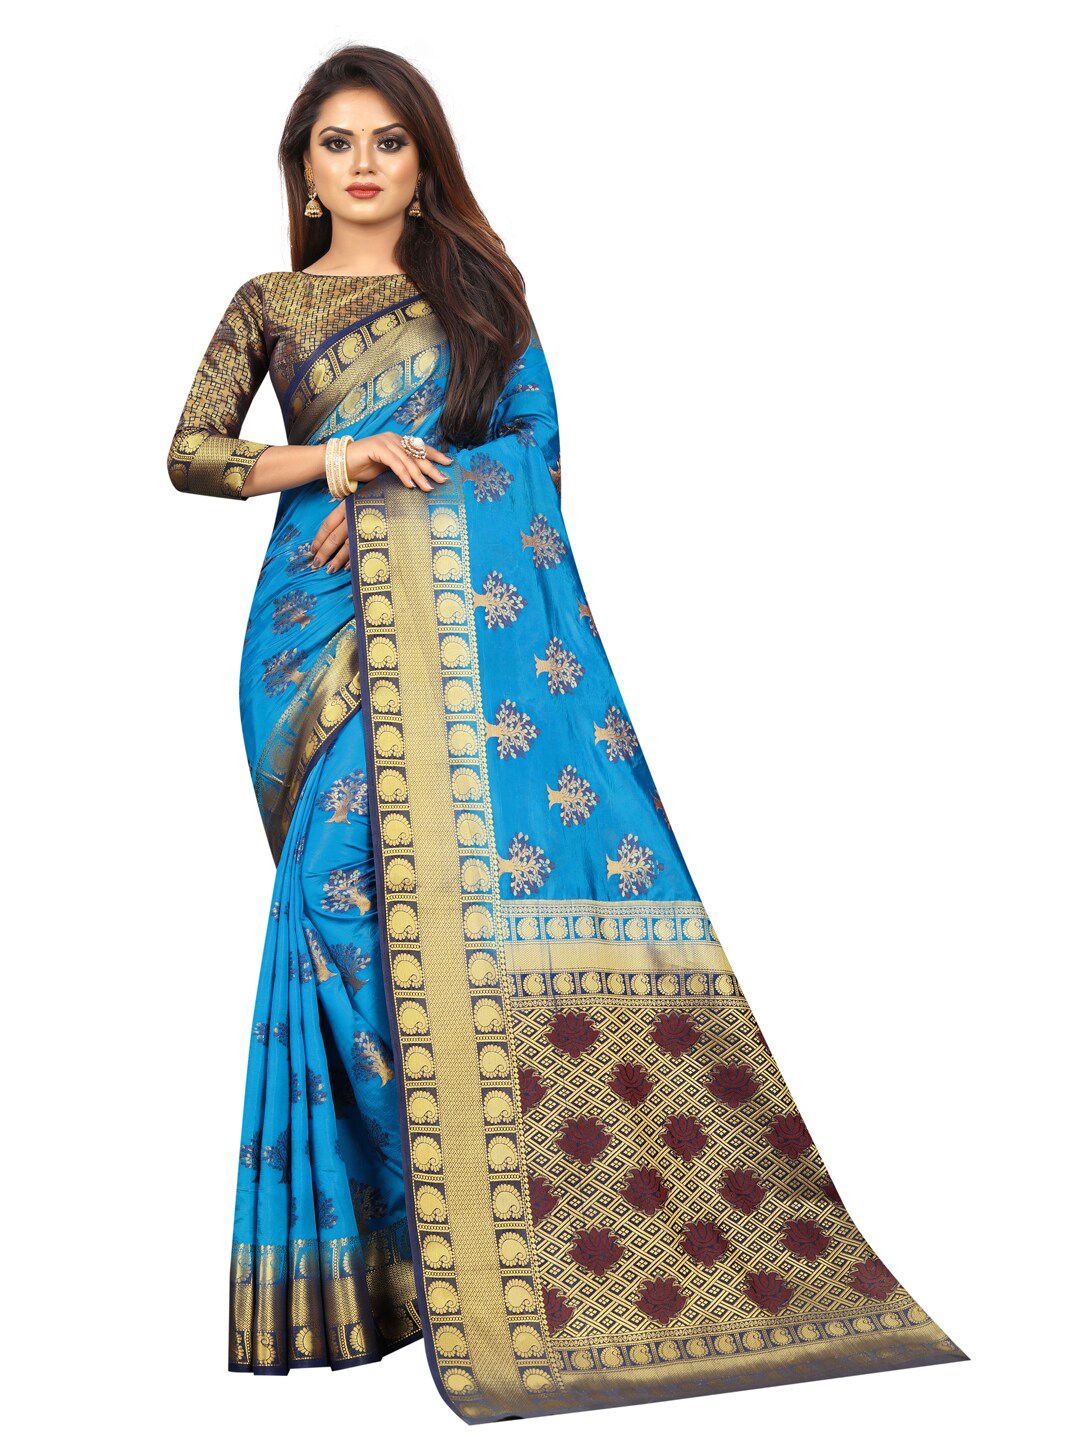 PERFECT WEAR Turquoise Blue & Gold-Toned Ethnic Motifs Silk Cotton Banarasi Saree Price in India